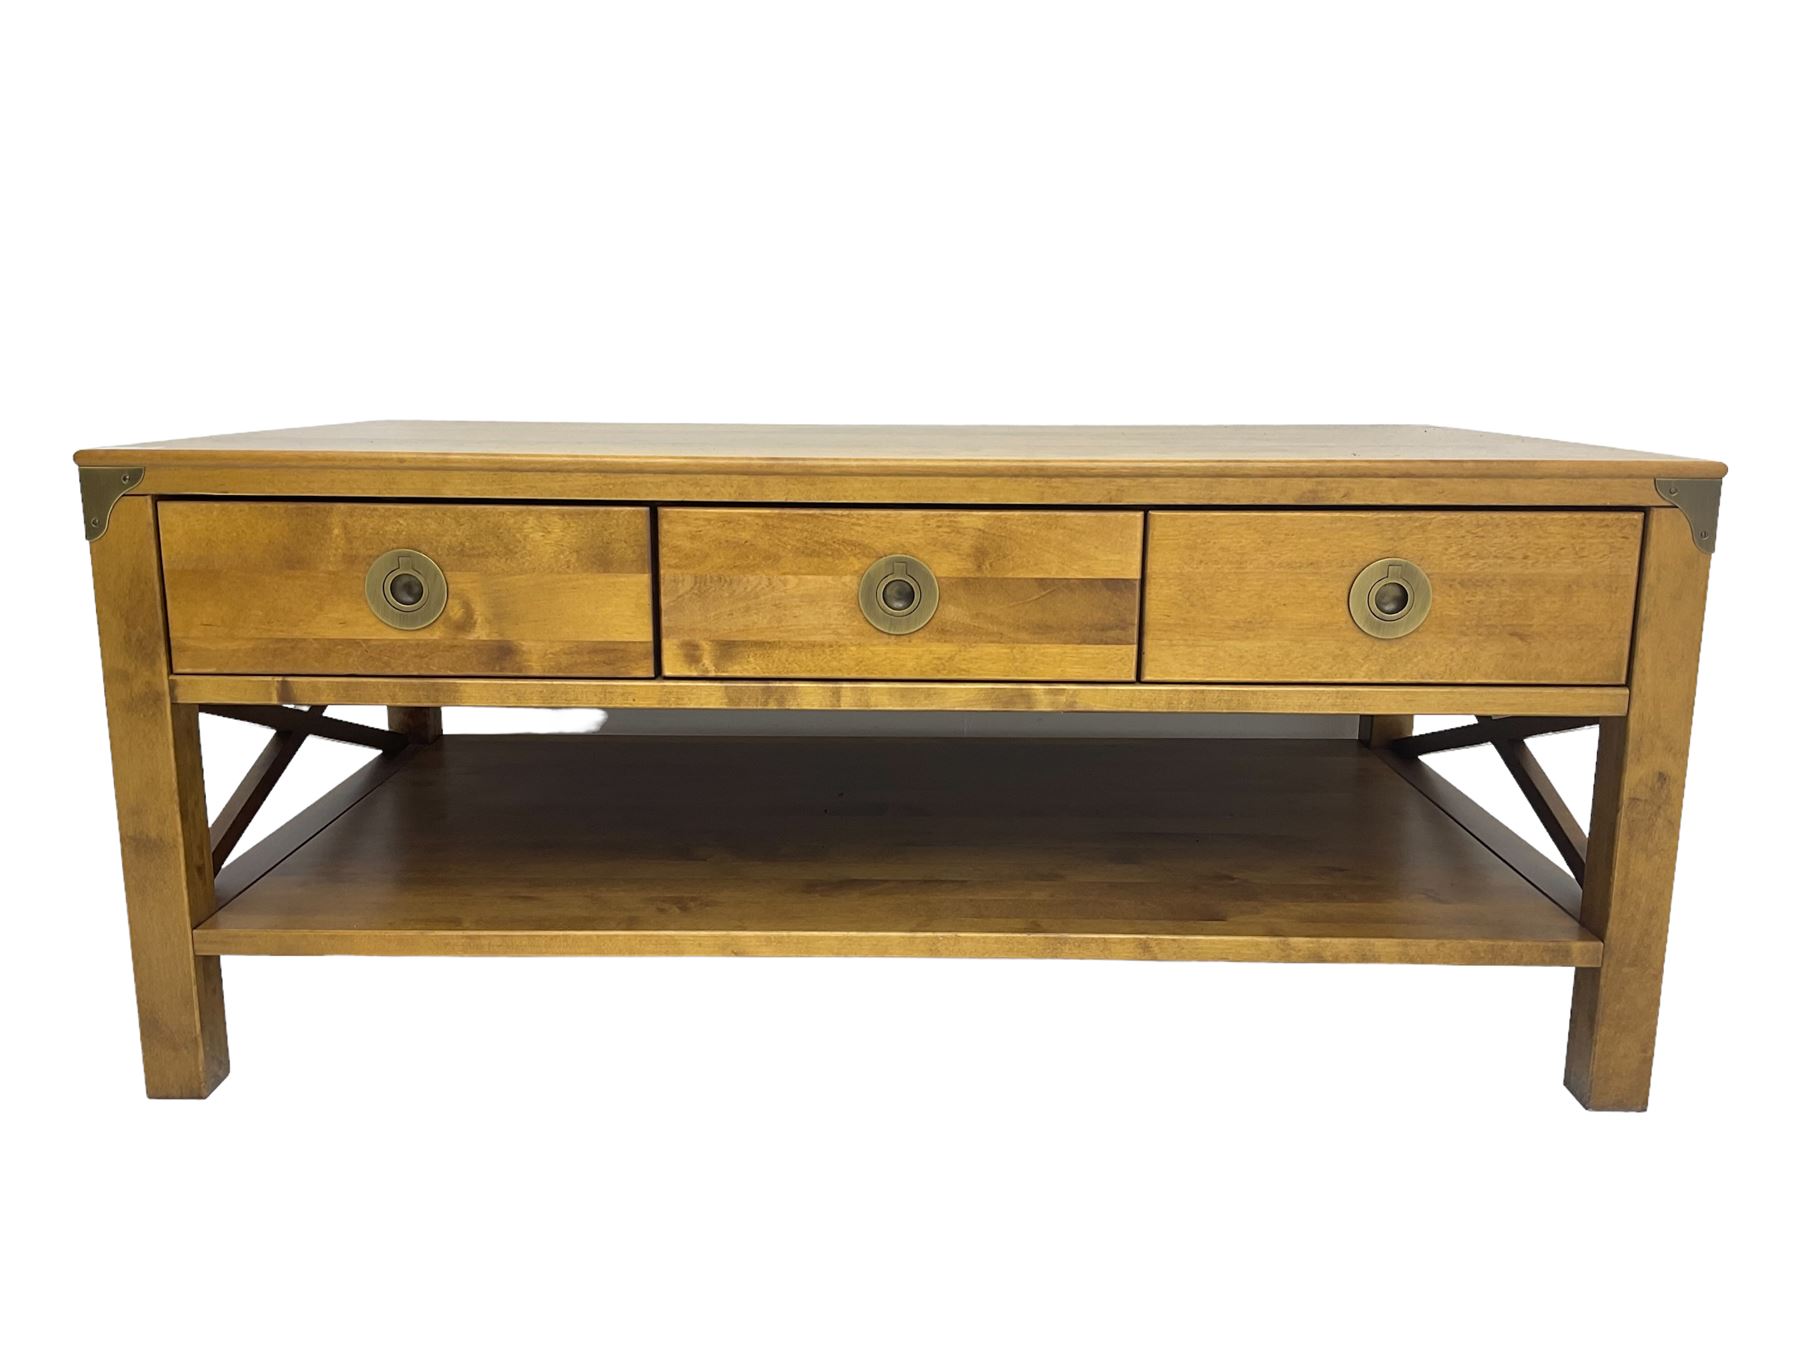 Rectangular hardwood coffee table